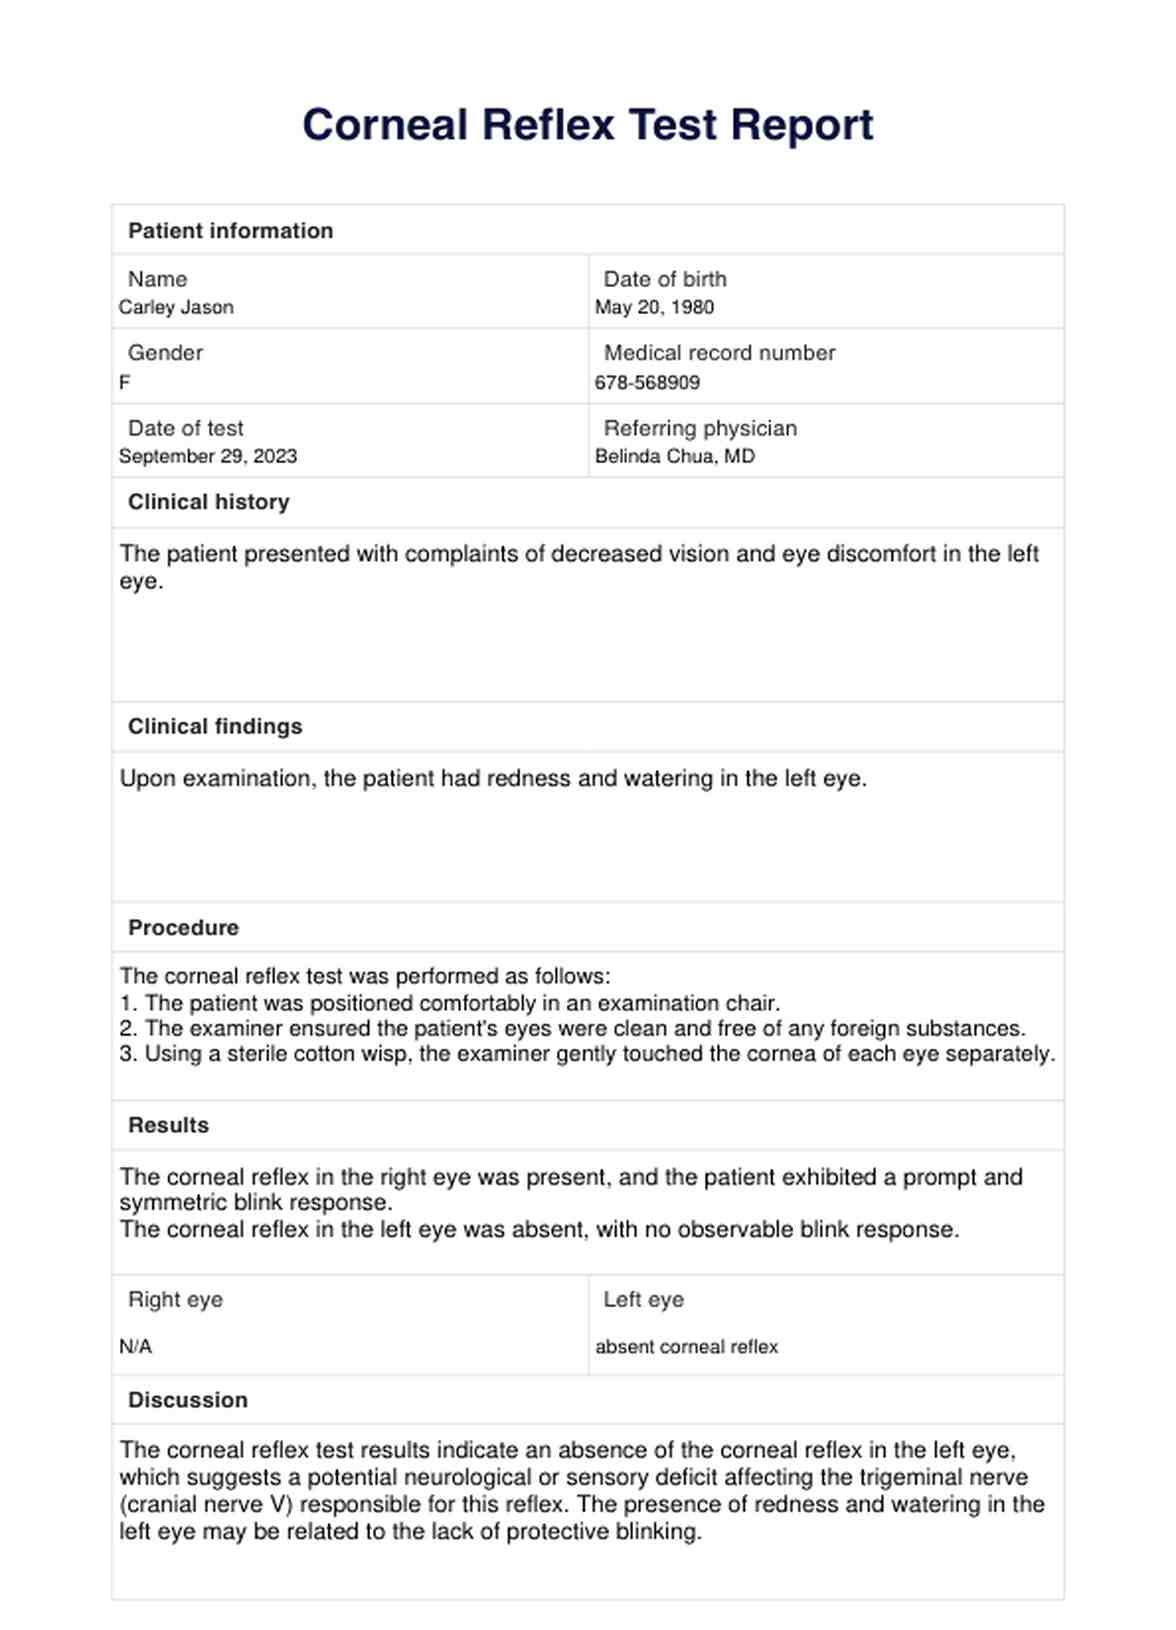 Corneal Reflex Test Reports PDF Example